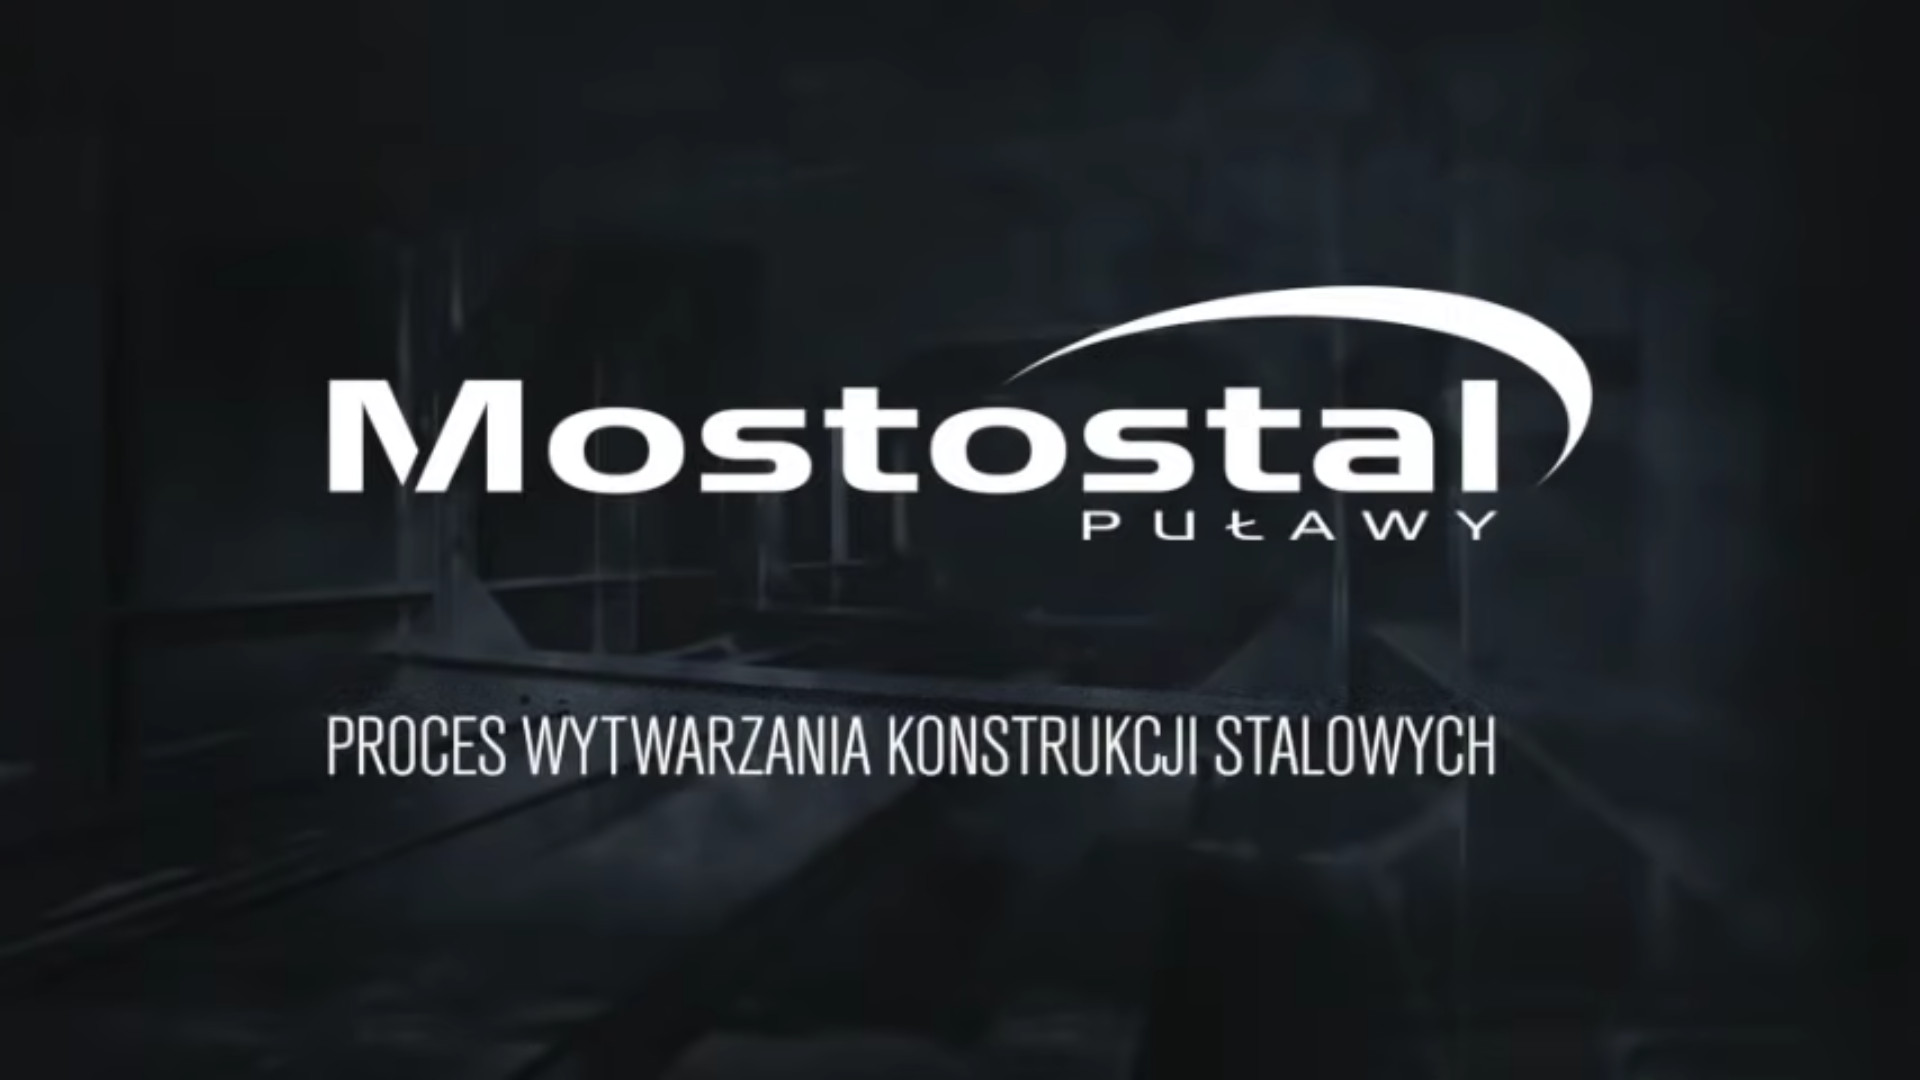 Mostostal Puławy S.A - Steel Construction Plant